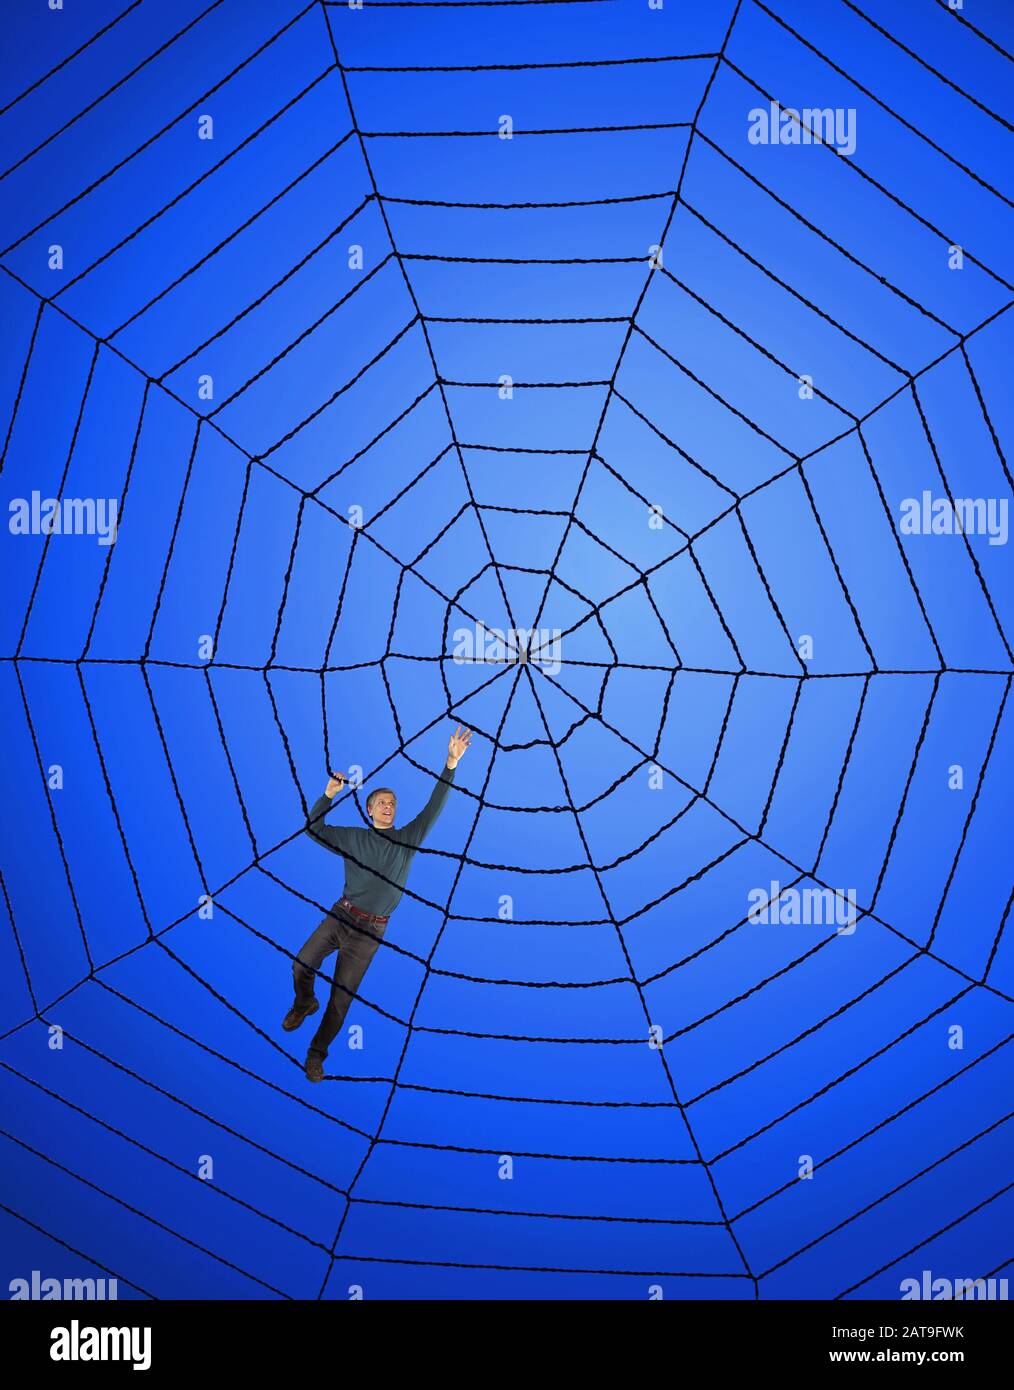 Man climbs upward and across a black web on blue background. Stock Photo